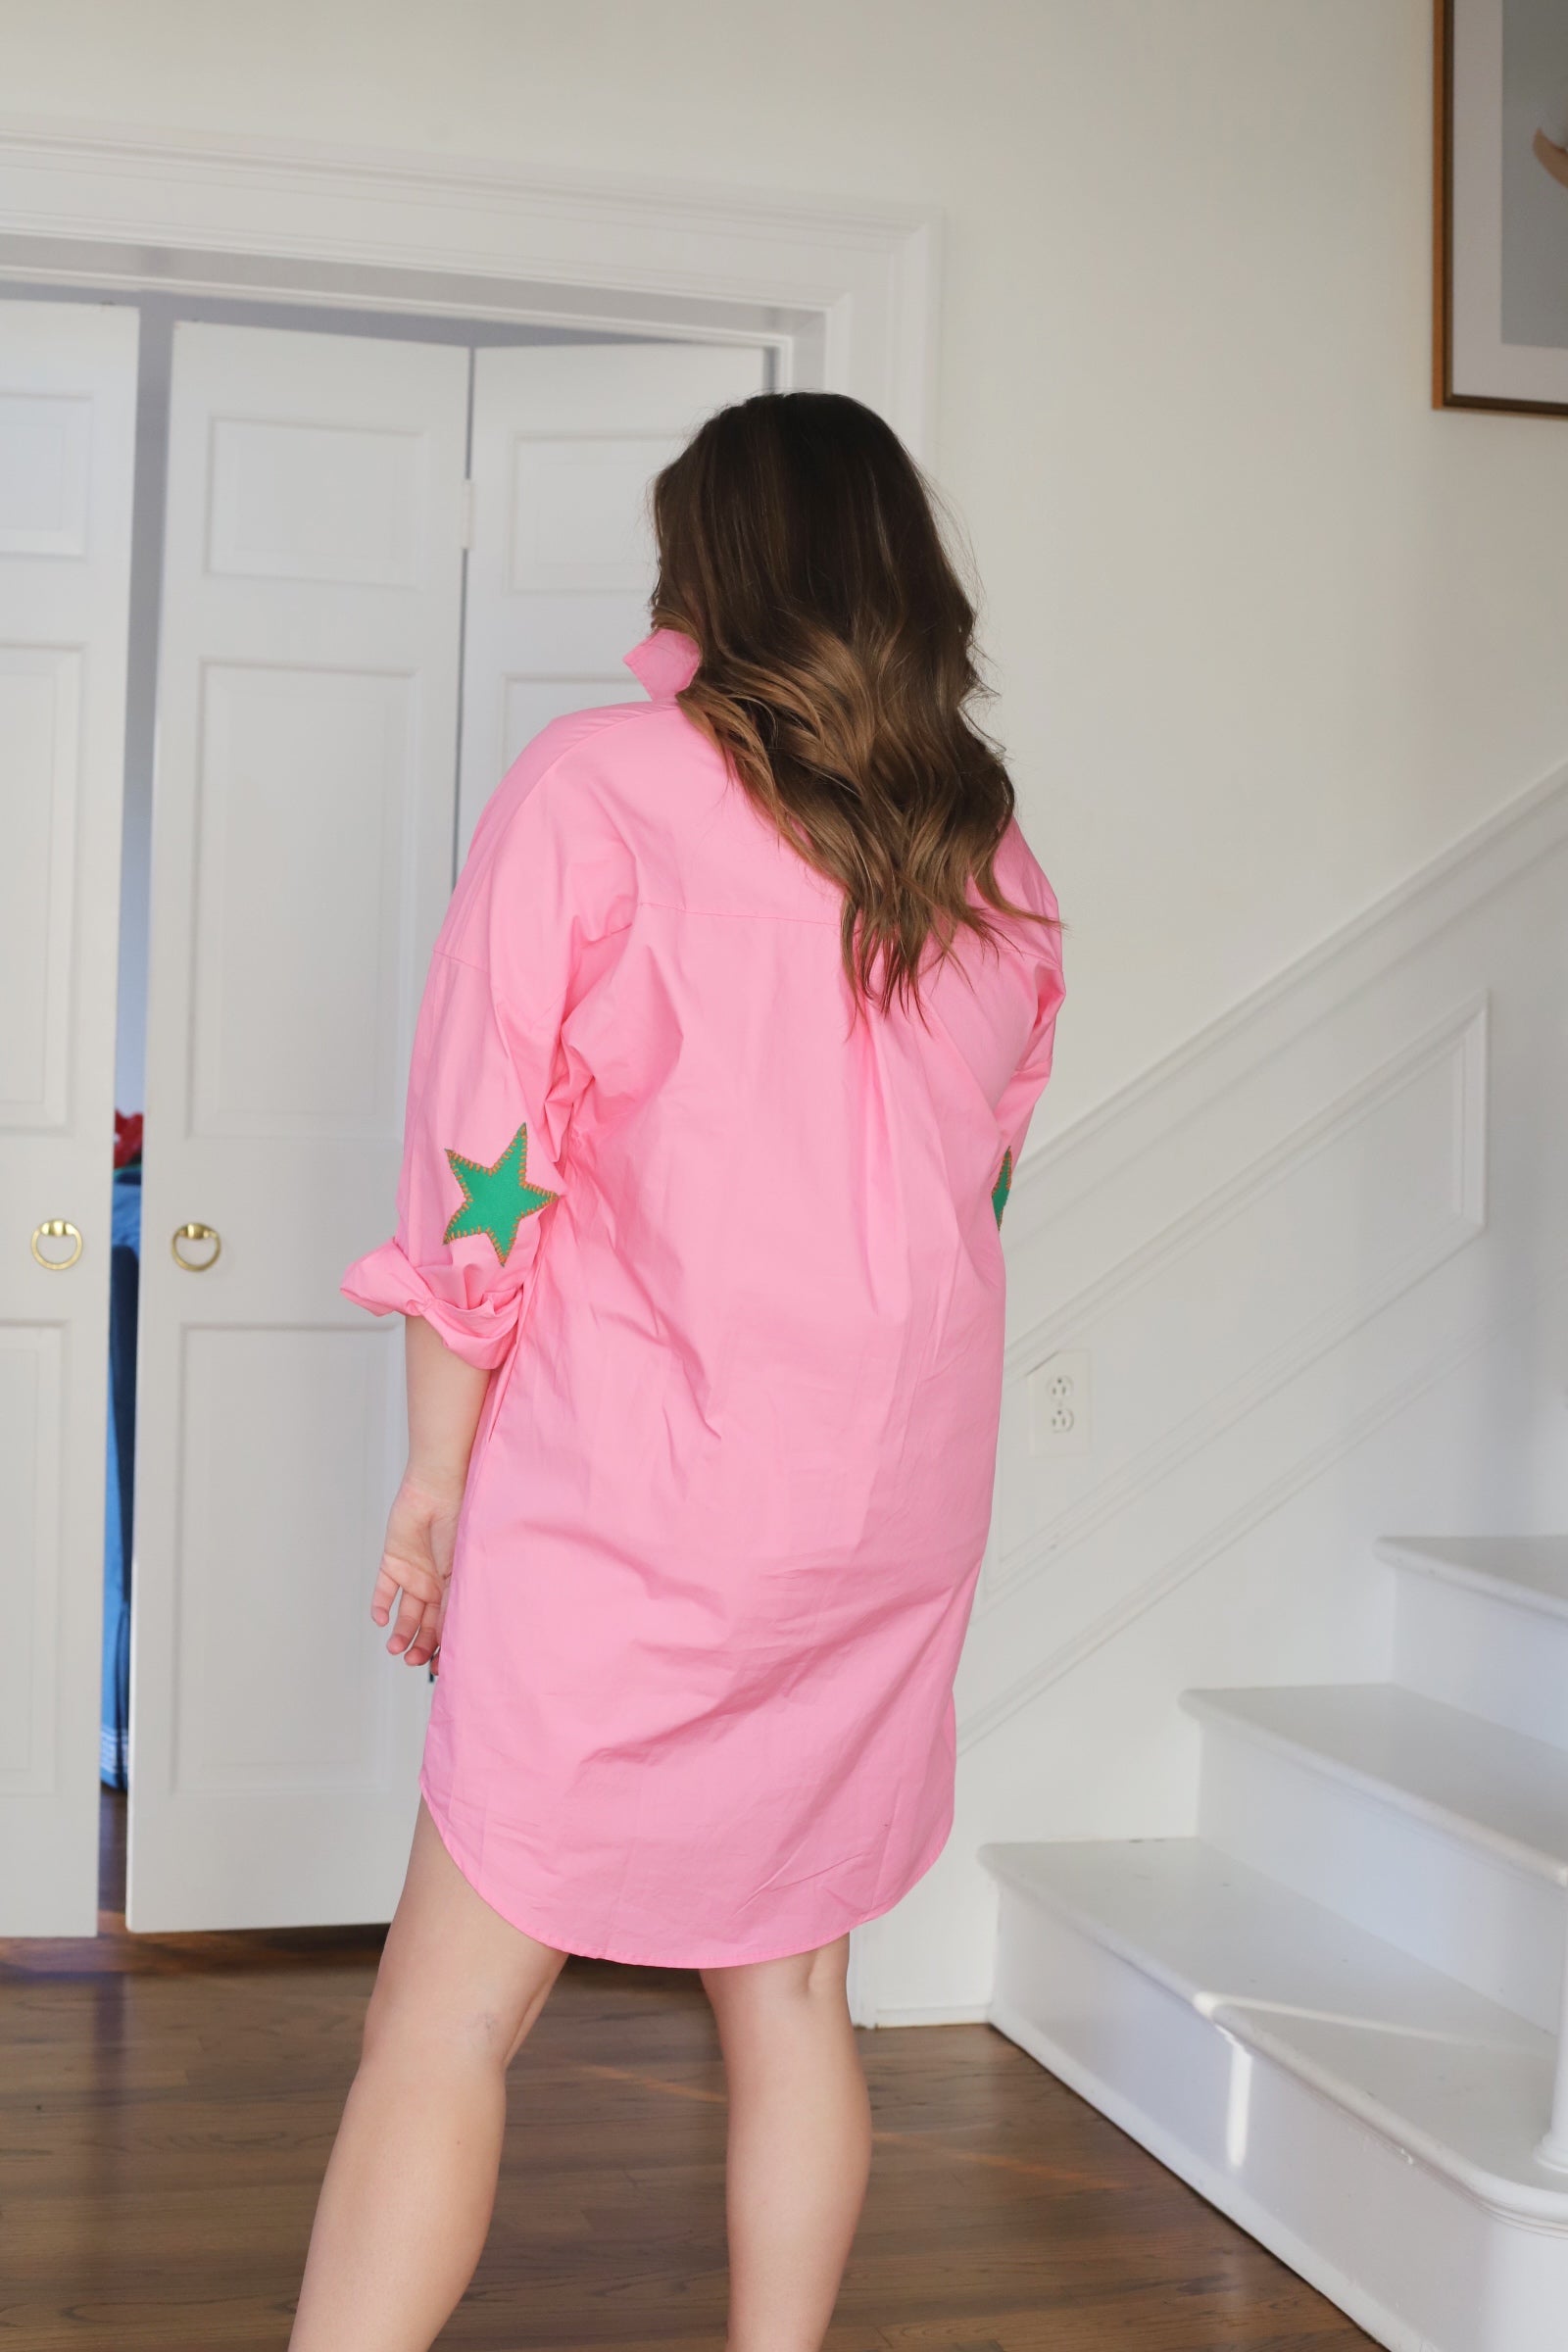 Preppy Star Dress - Pink w/Green Star